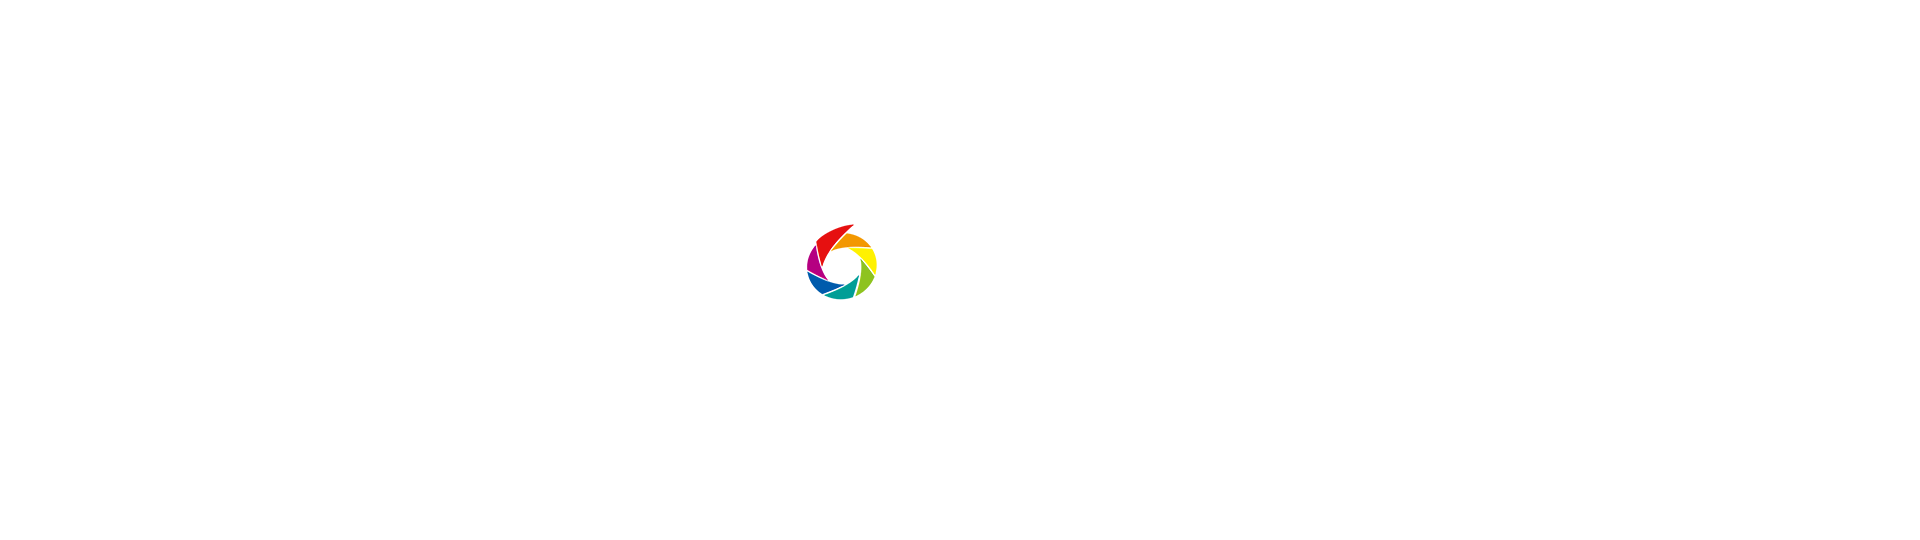 Emograph visual technologies